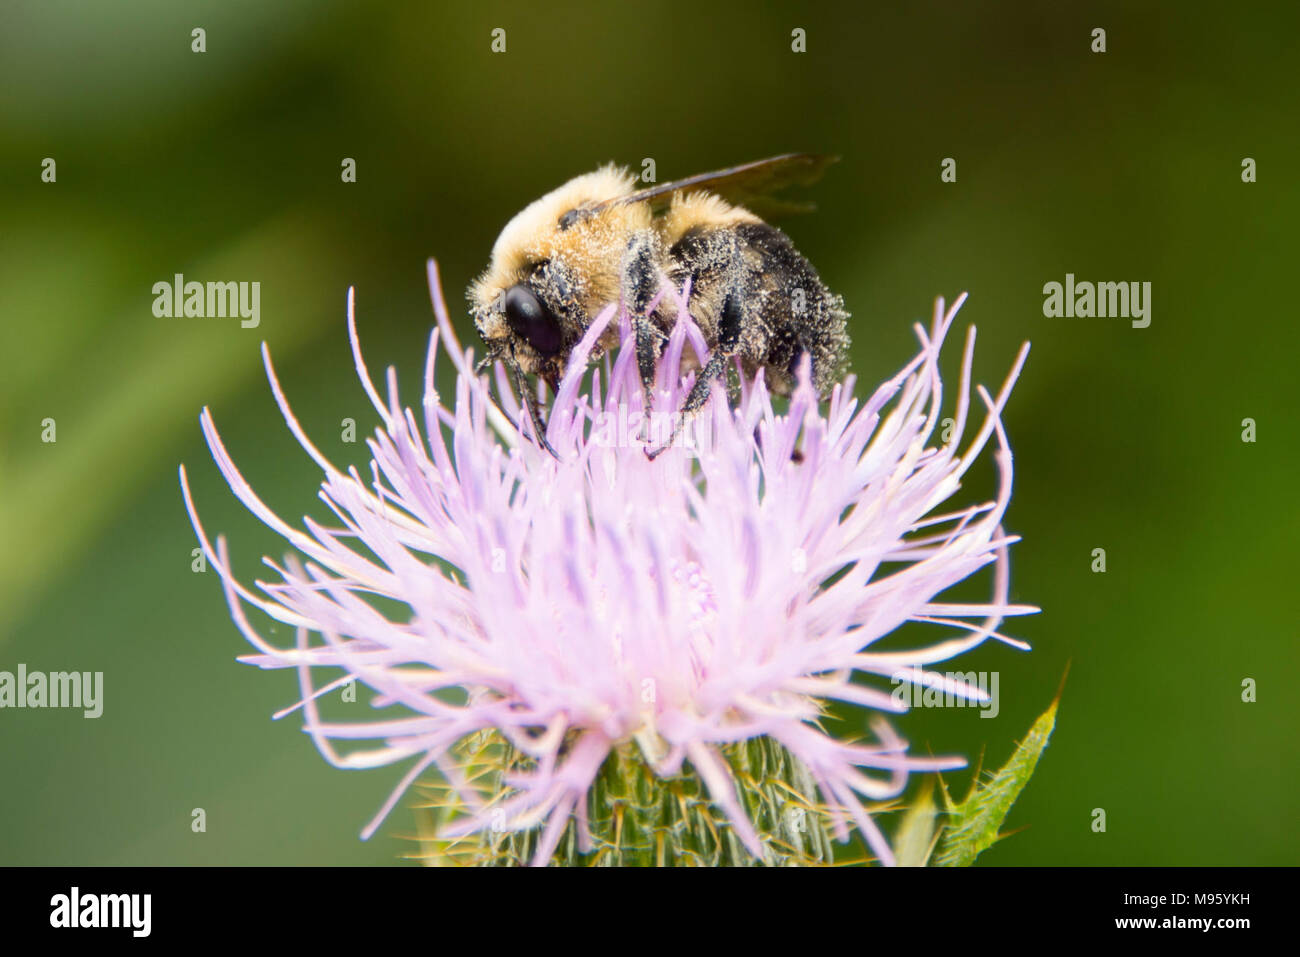 Bumblebee on thistle Stock Photo